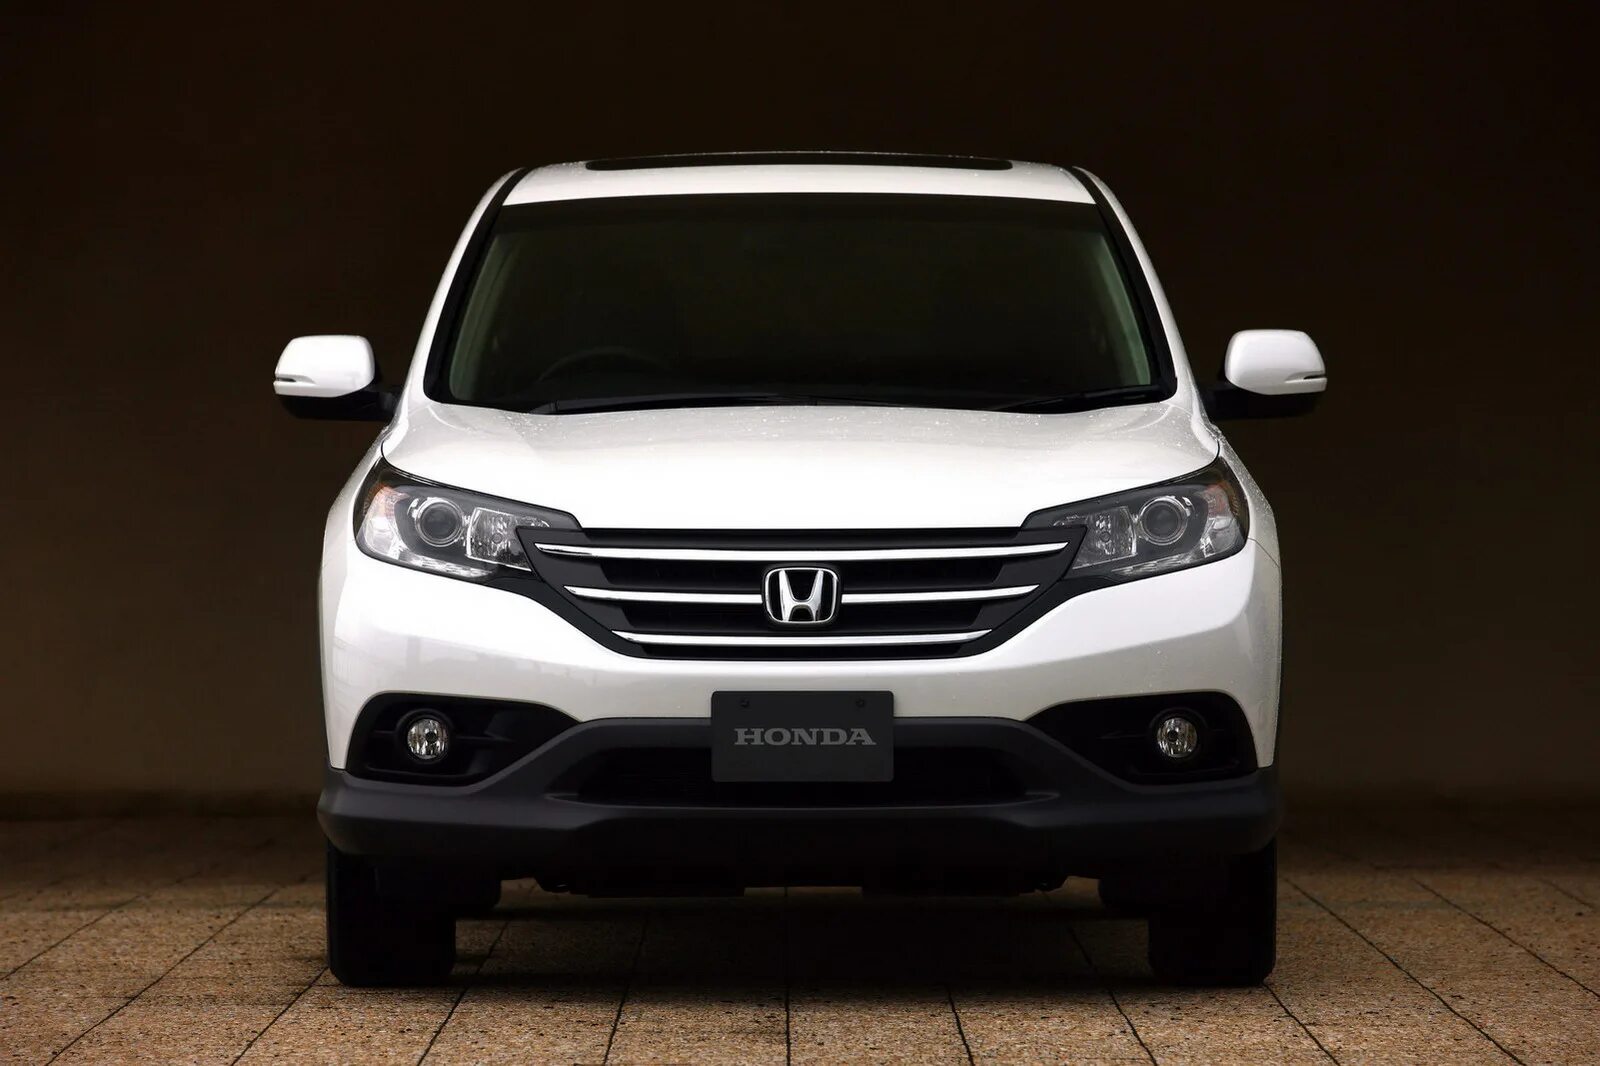 Honda CRV 2012 белая. Honda CR-V 2011. Honda CRV белая 2013. Honda CR-V белая CRV 2012.